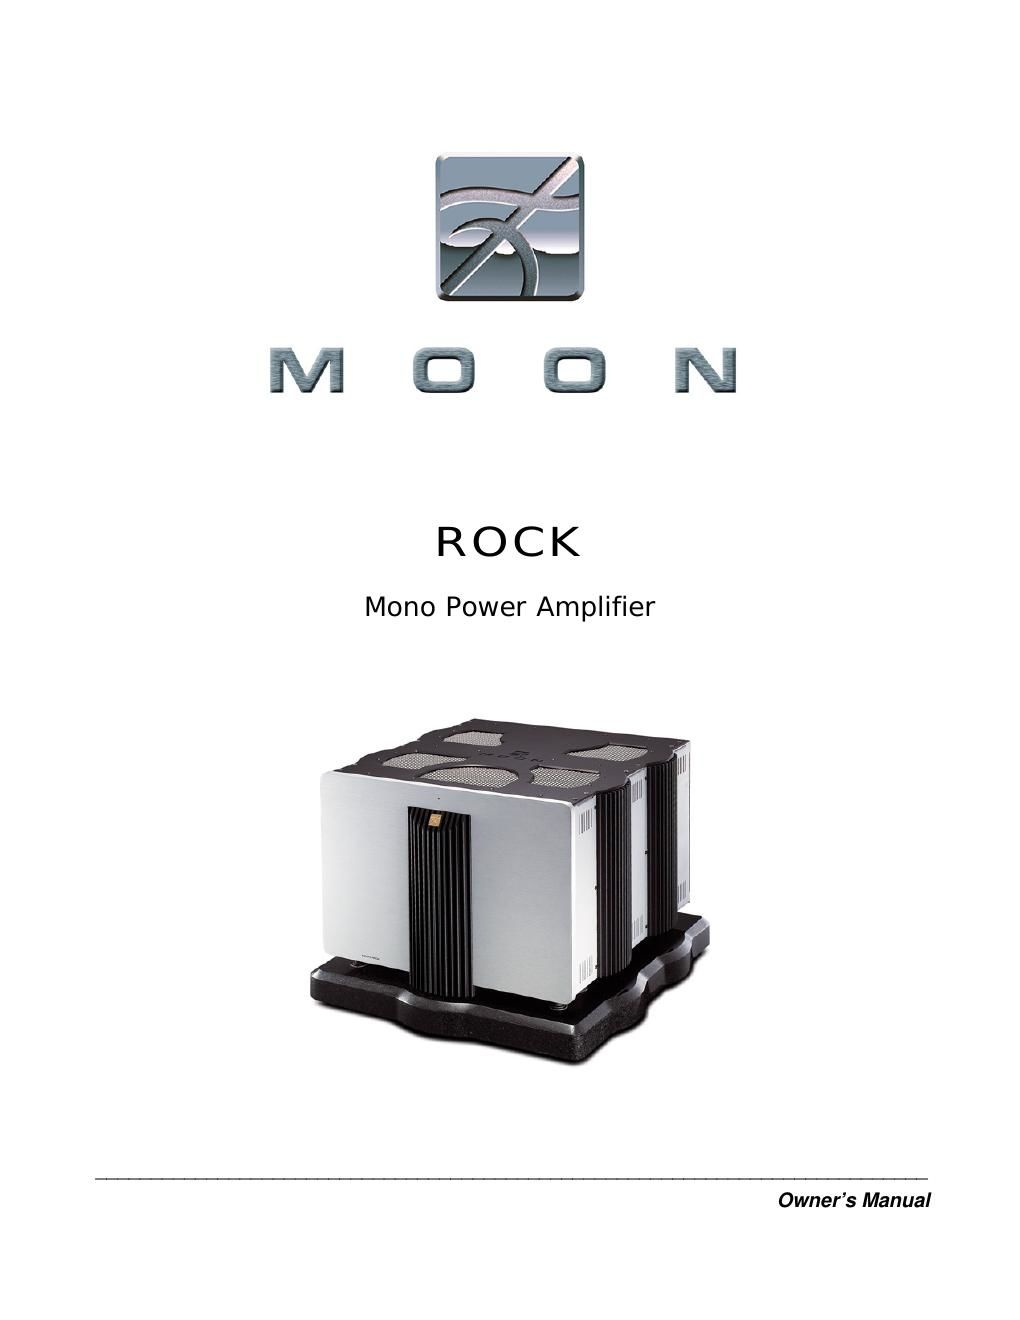 moon rock owners manual